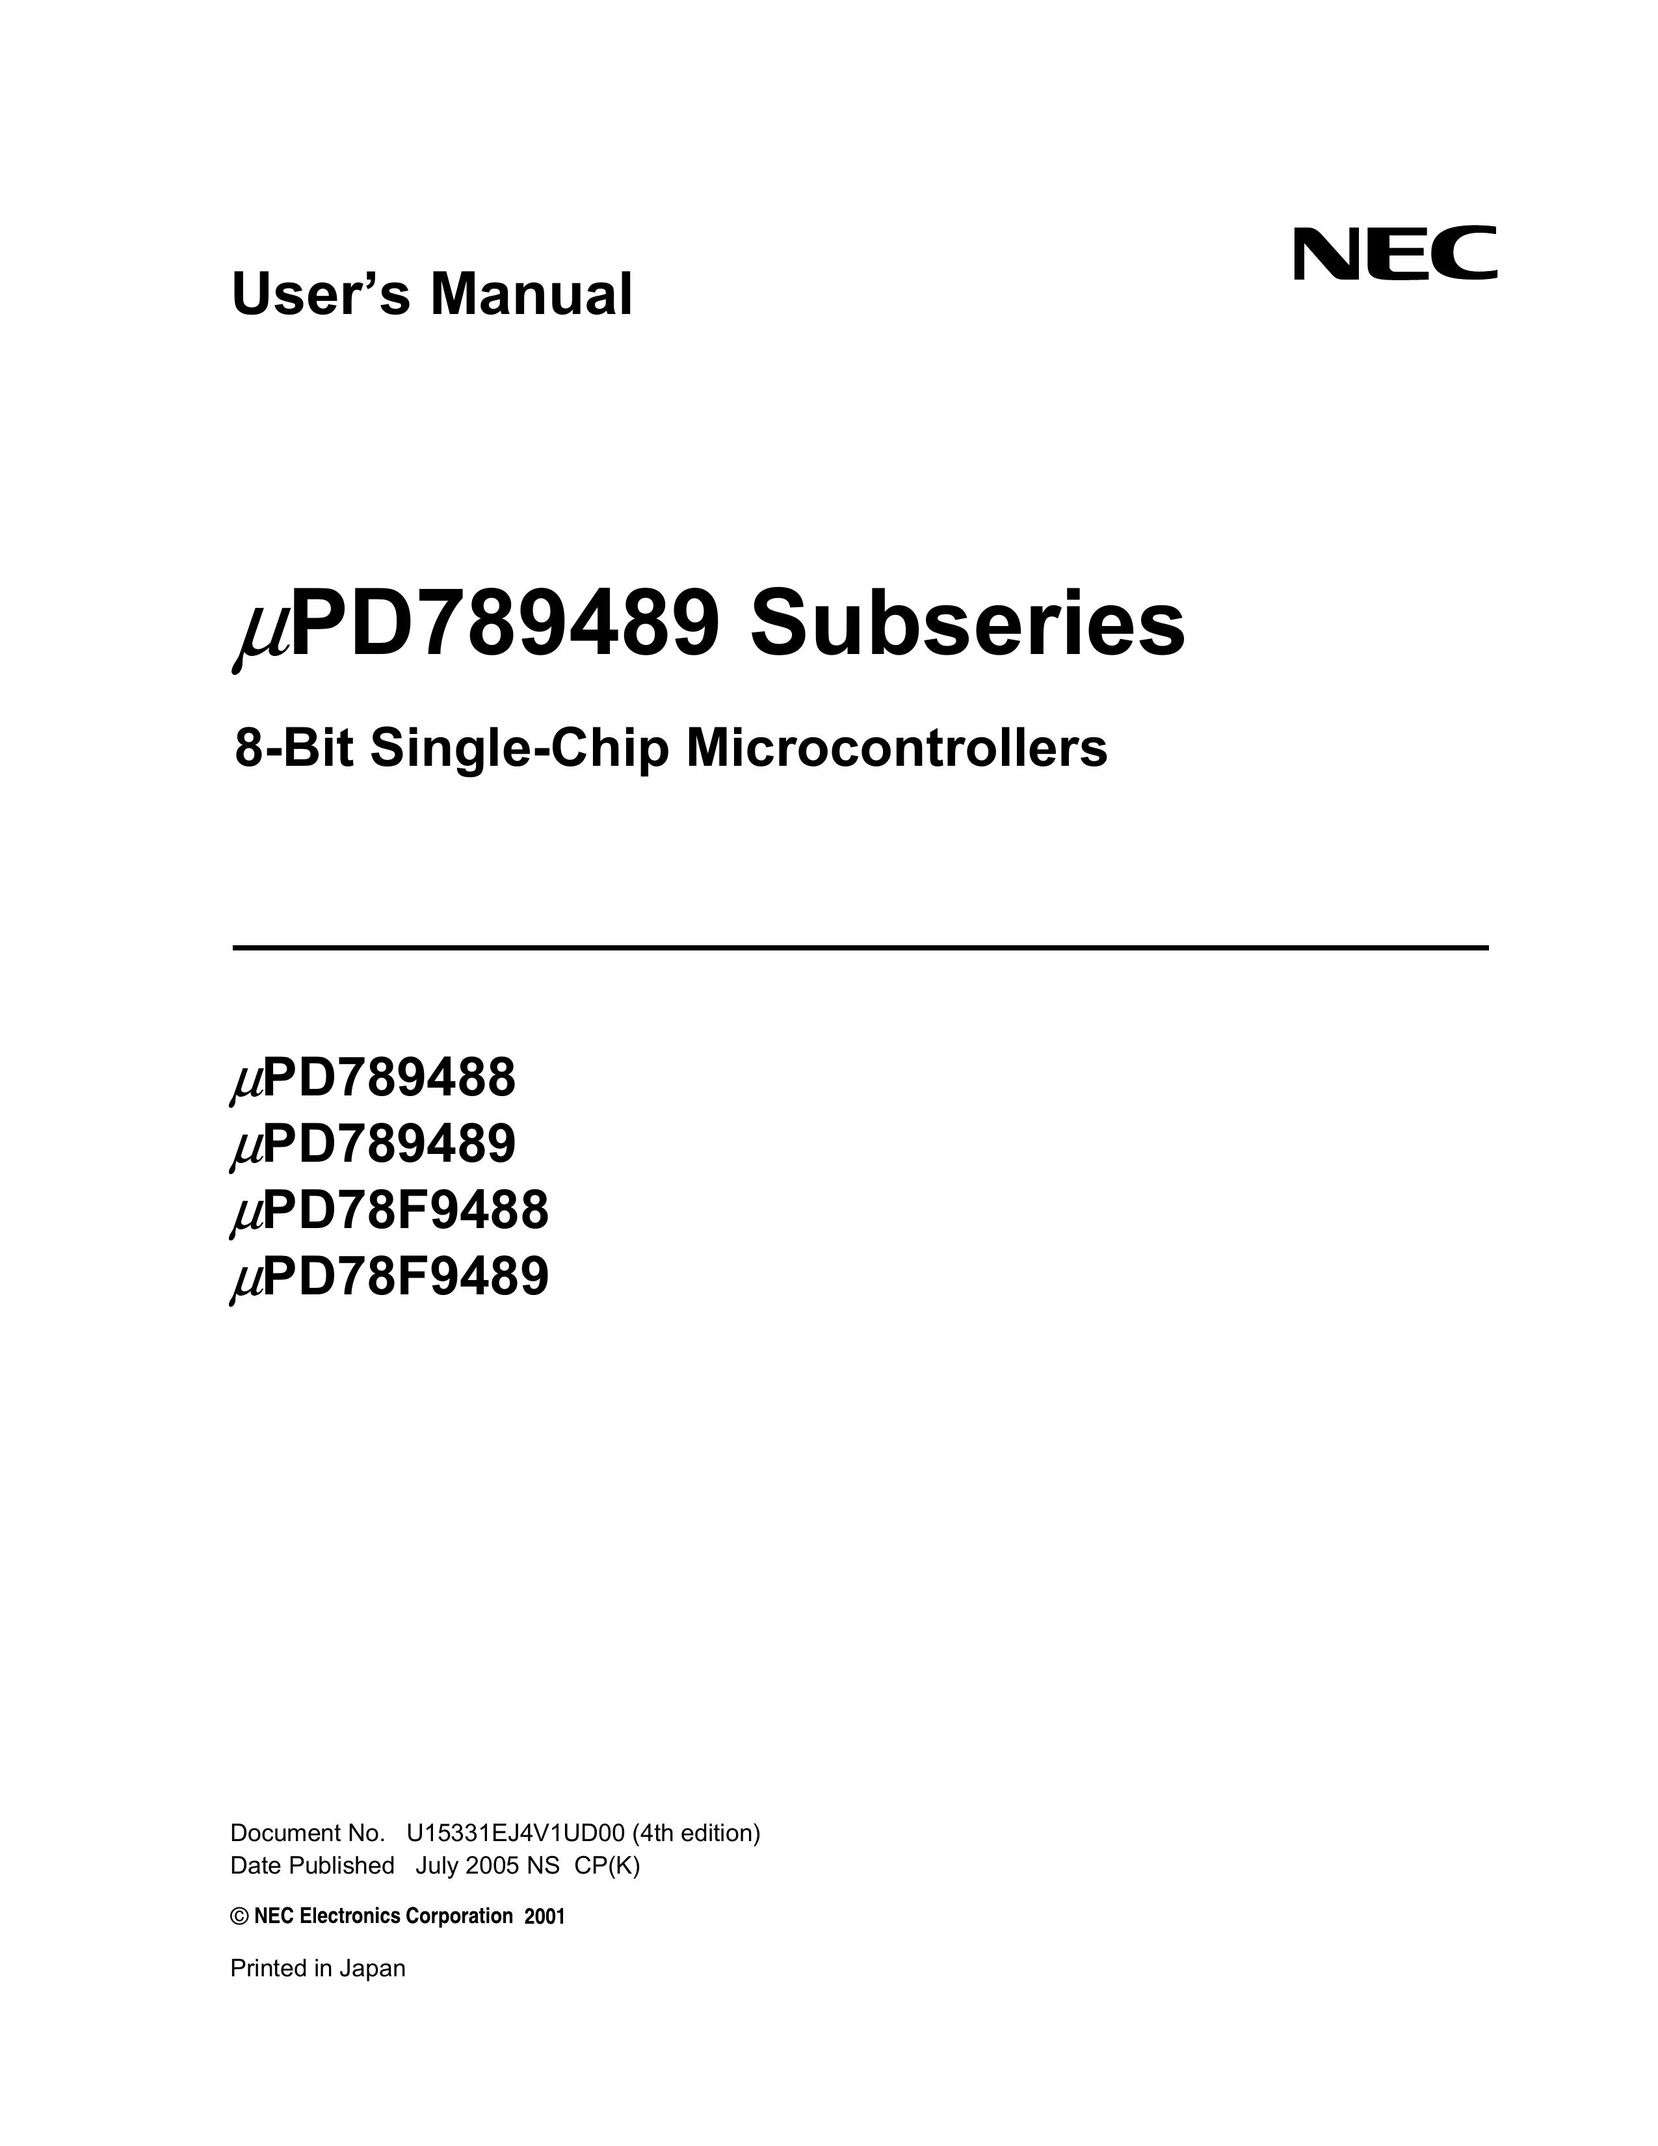 NEC PD78F9489 Computer Hardware User Manual